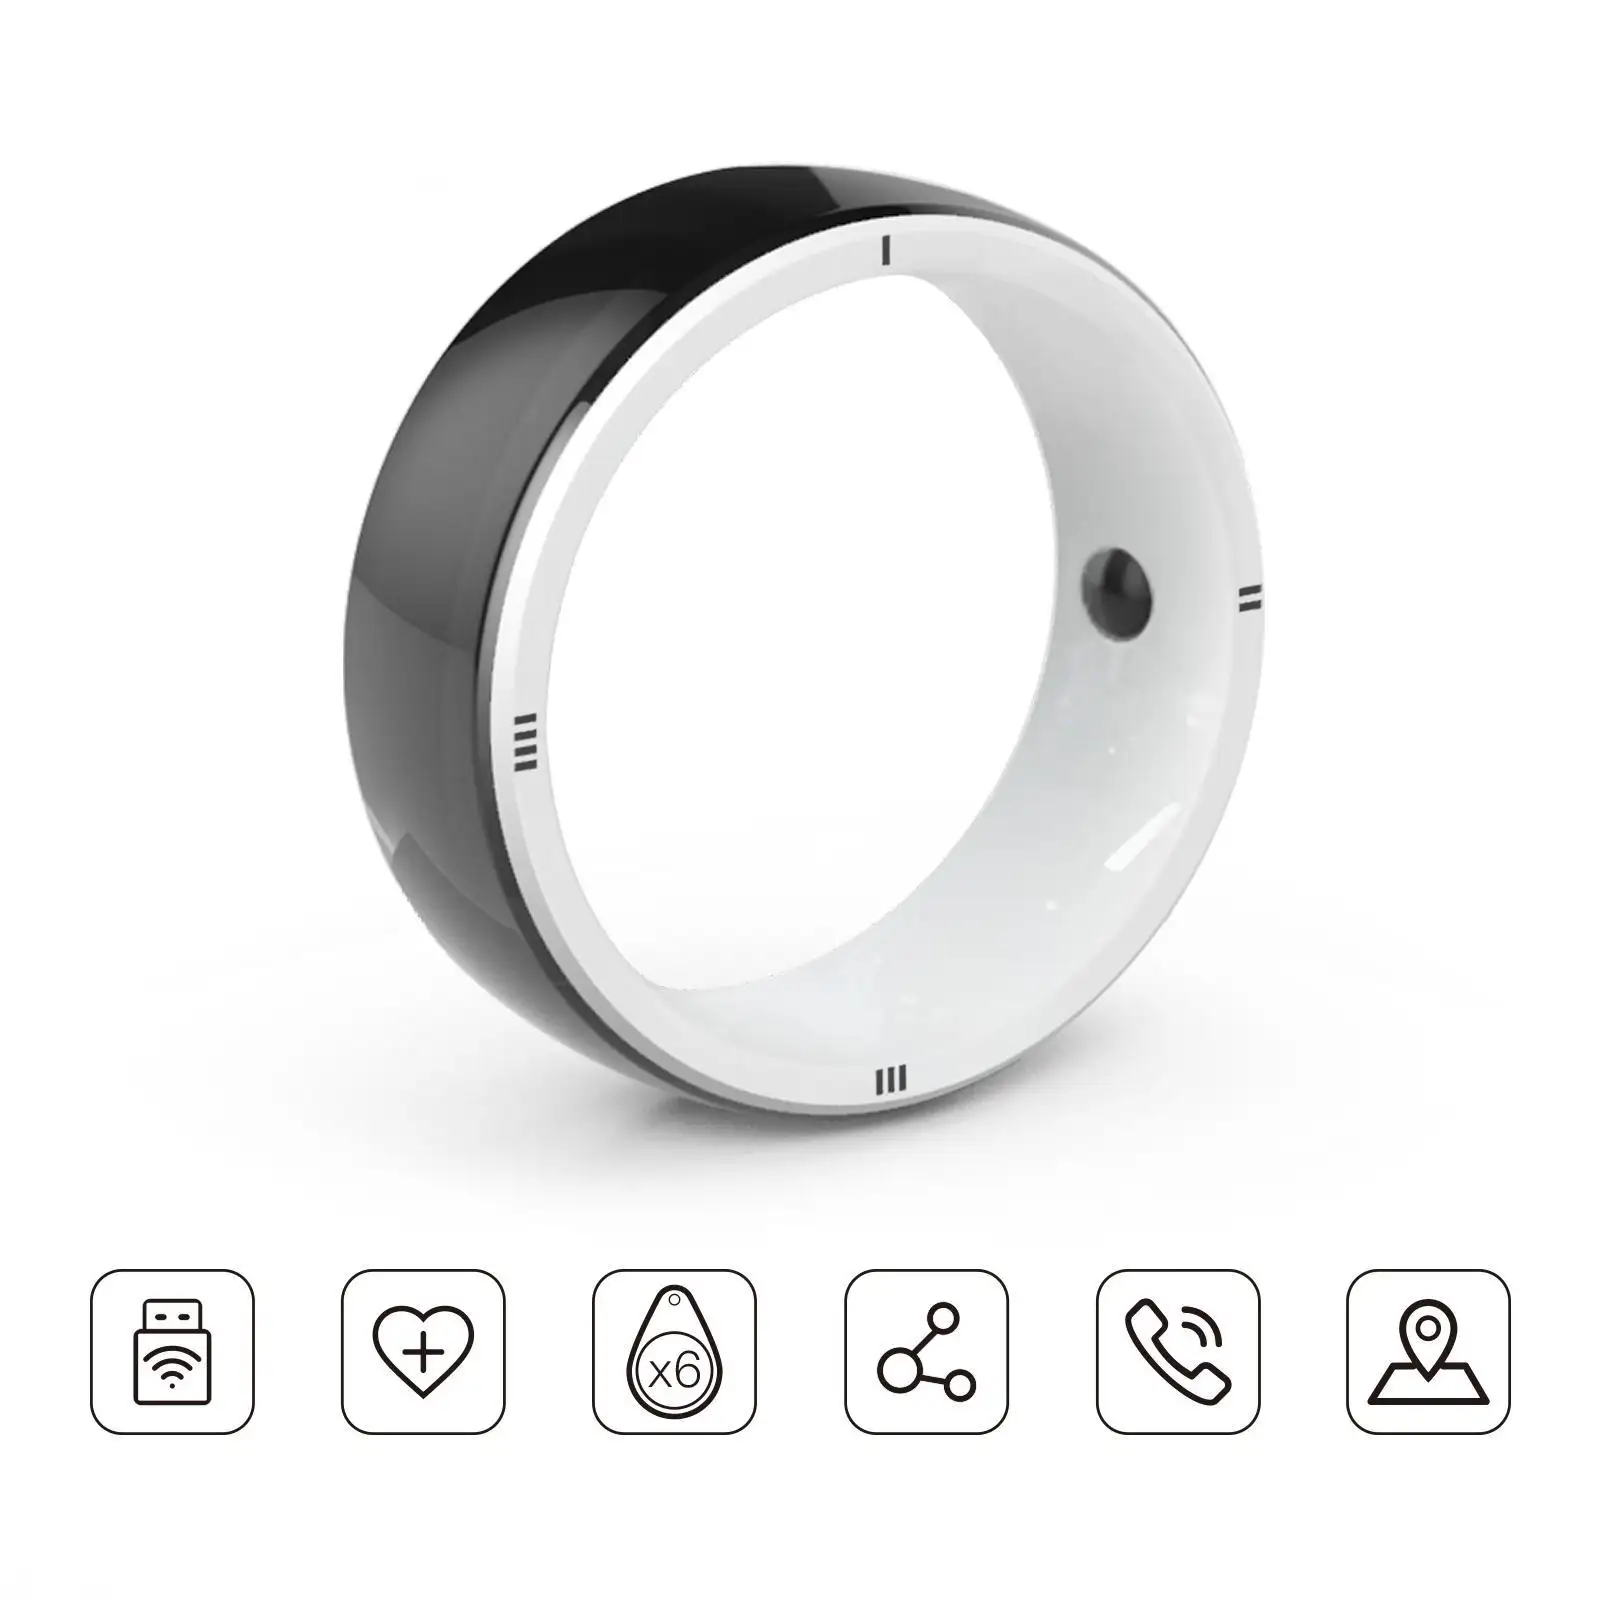 JAKCOM R5 cincin pintar baru cincin pintar lebih baik dari pelindung layar matte 2018 iq nirkabel earbuds diana film Portabel video